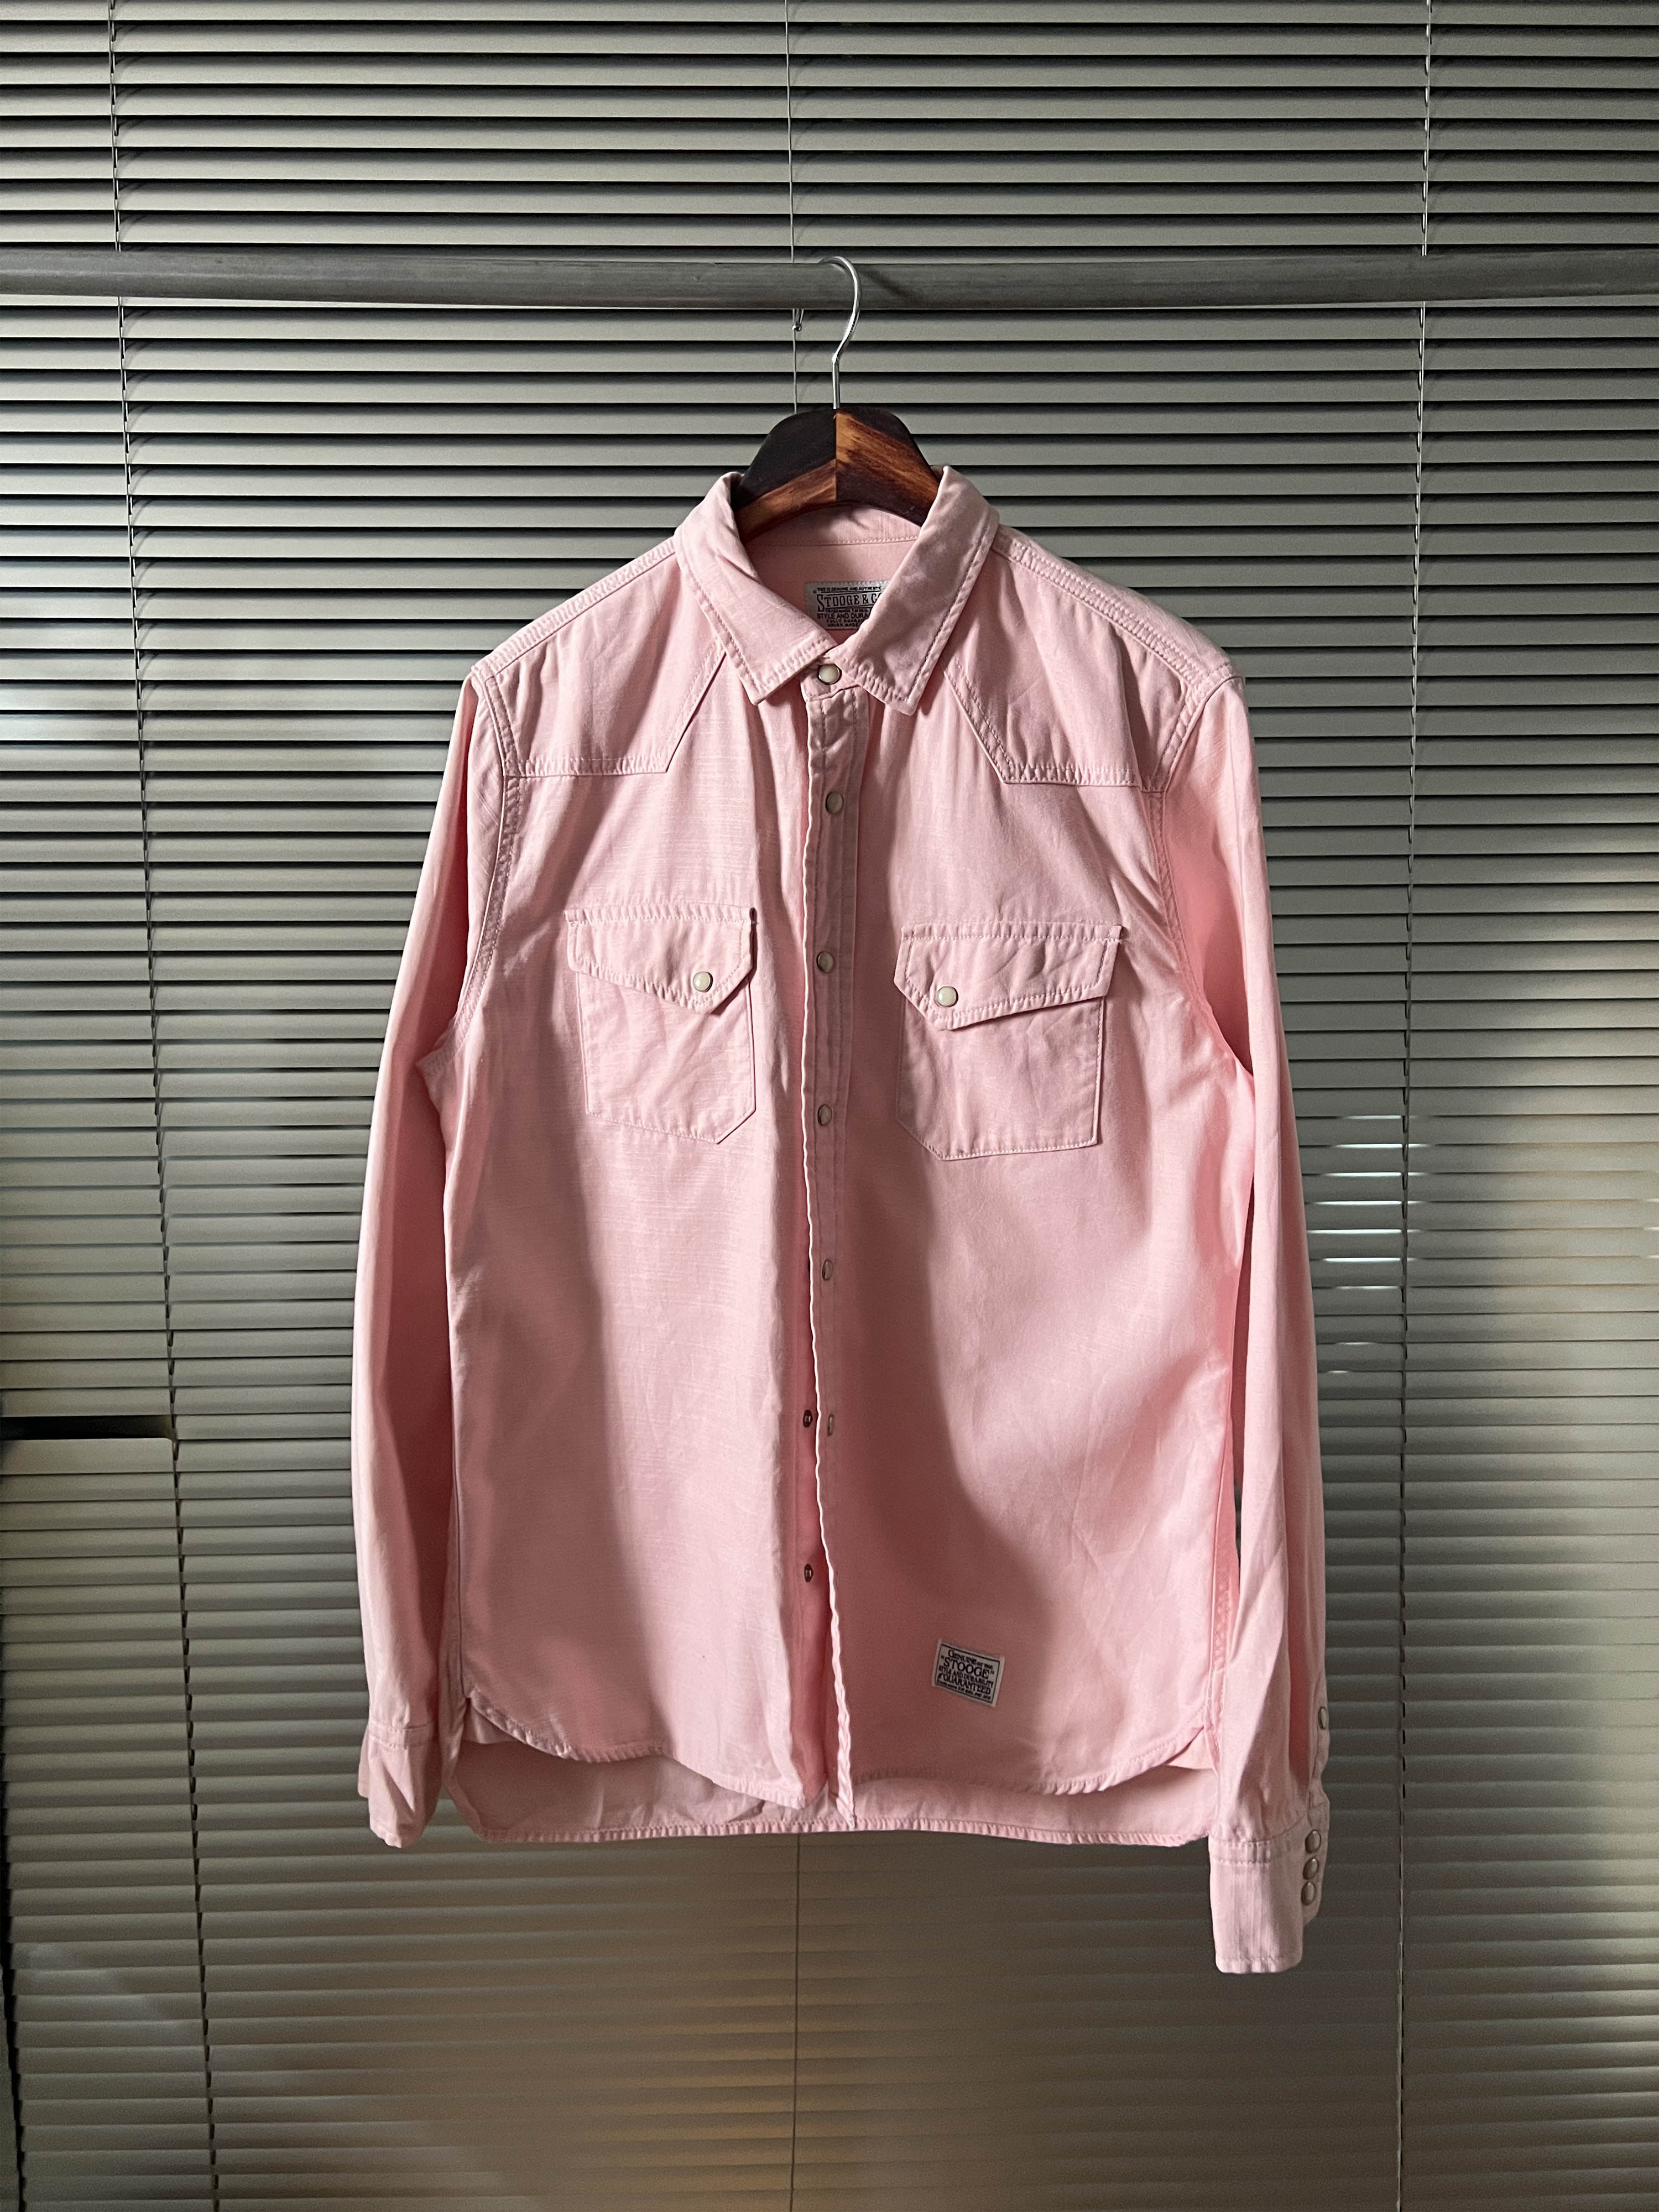 STROOGE&amp;CO pink western shirts